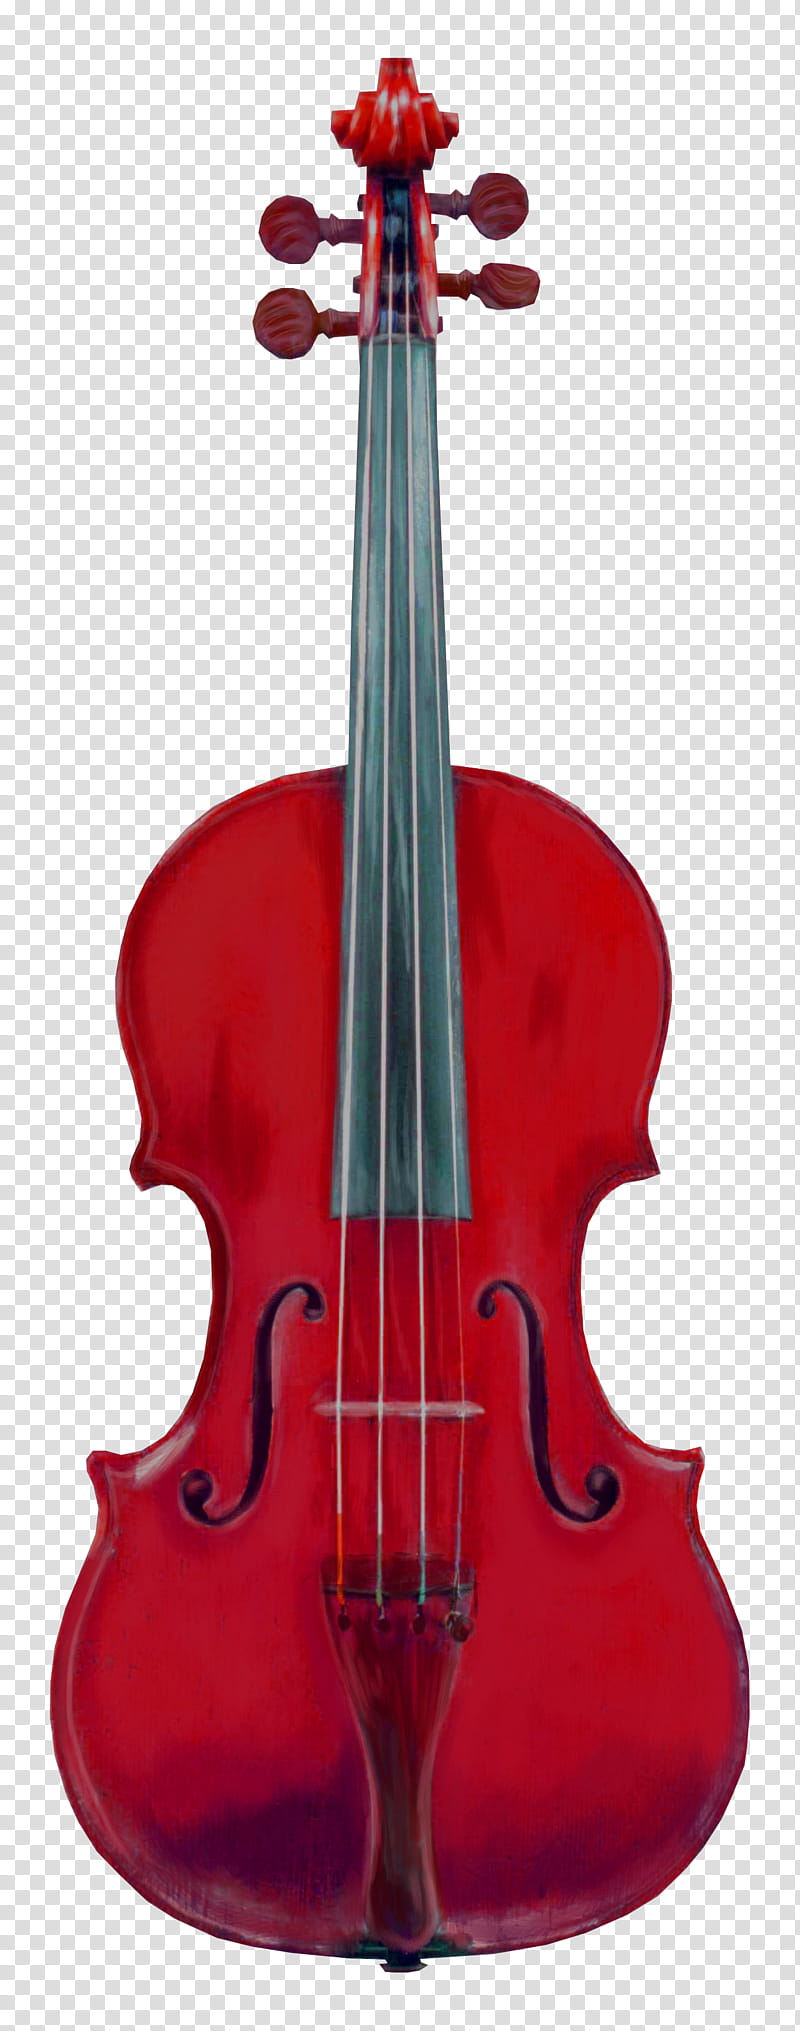 Violin, red violin transparent background PNG clipart